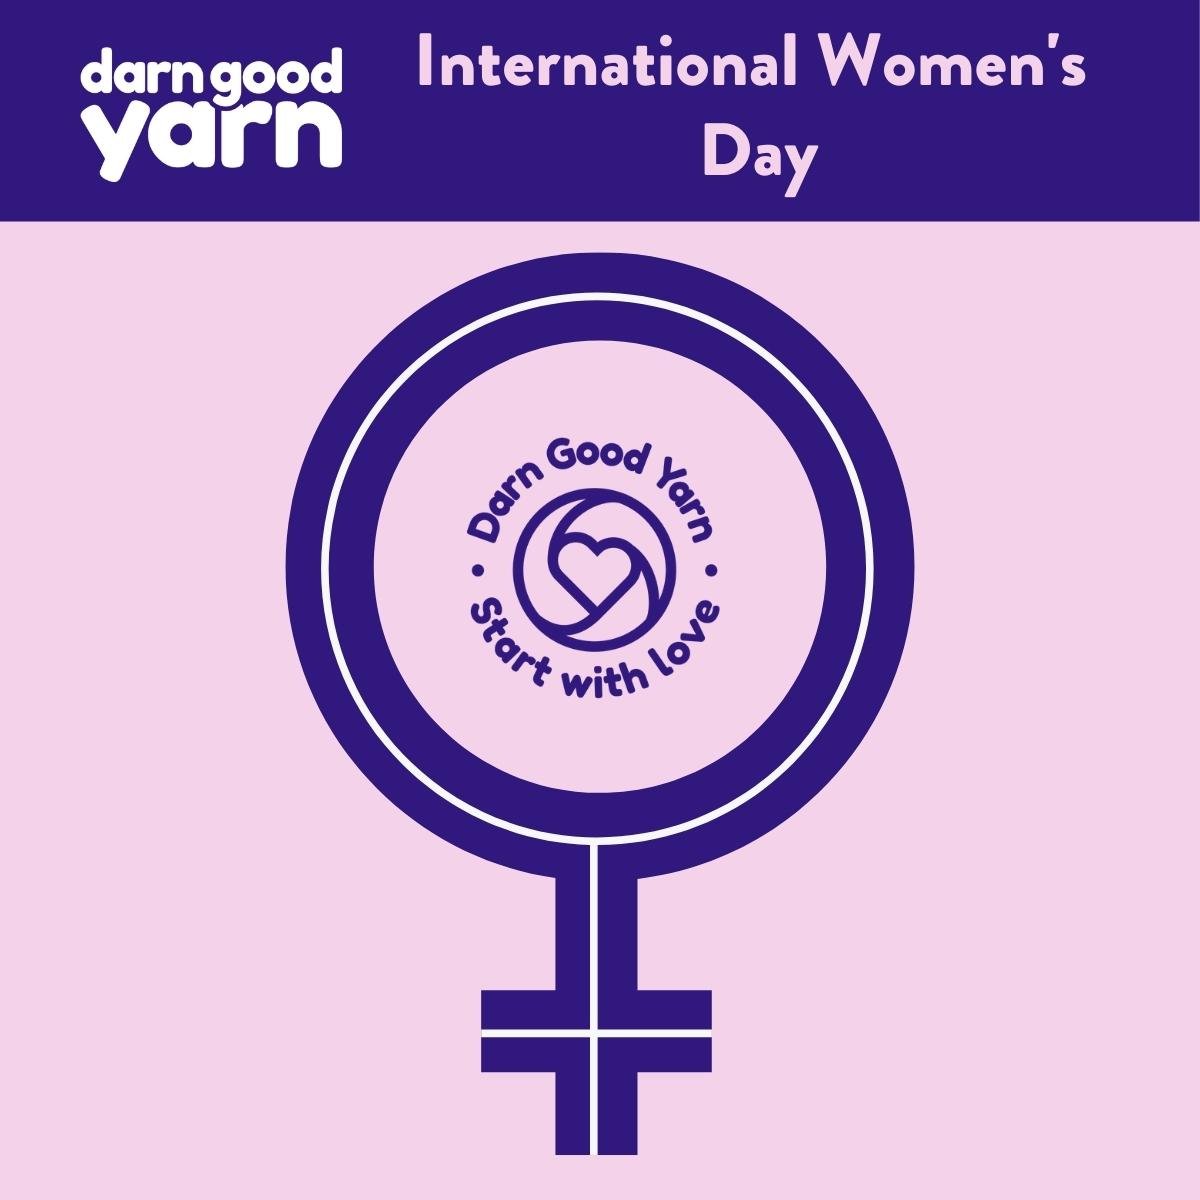 International Women's Day - Darn Good Yarn